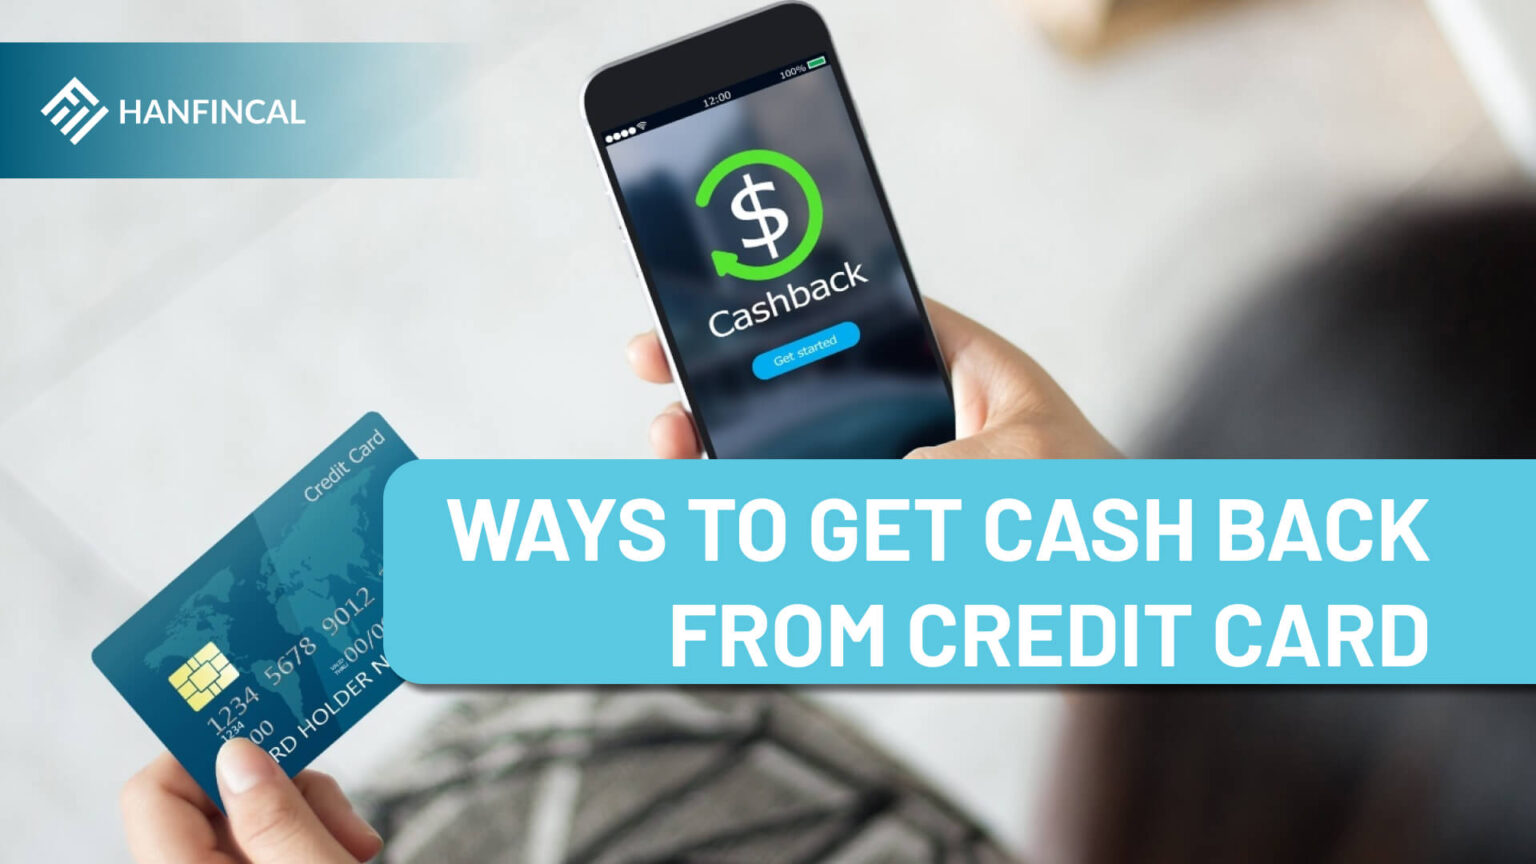 can-you-get-cash-back-credit-card-2-impressive-ways-hanfincal